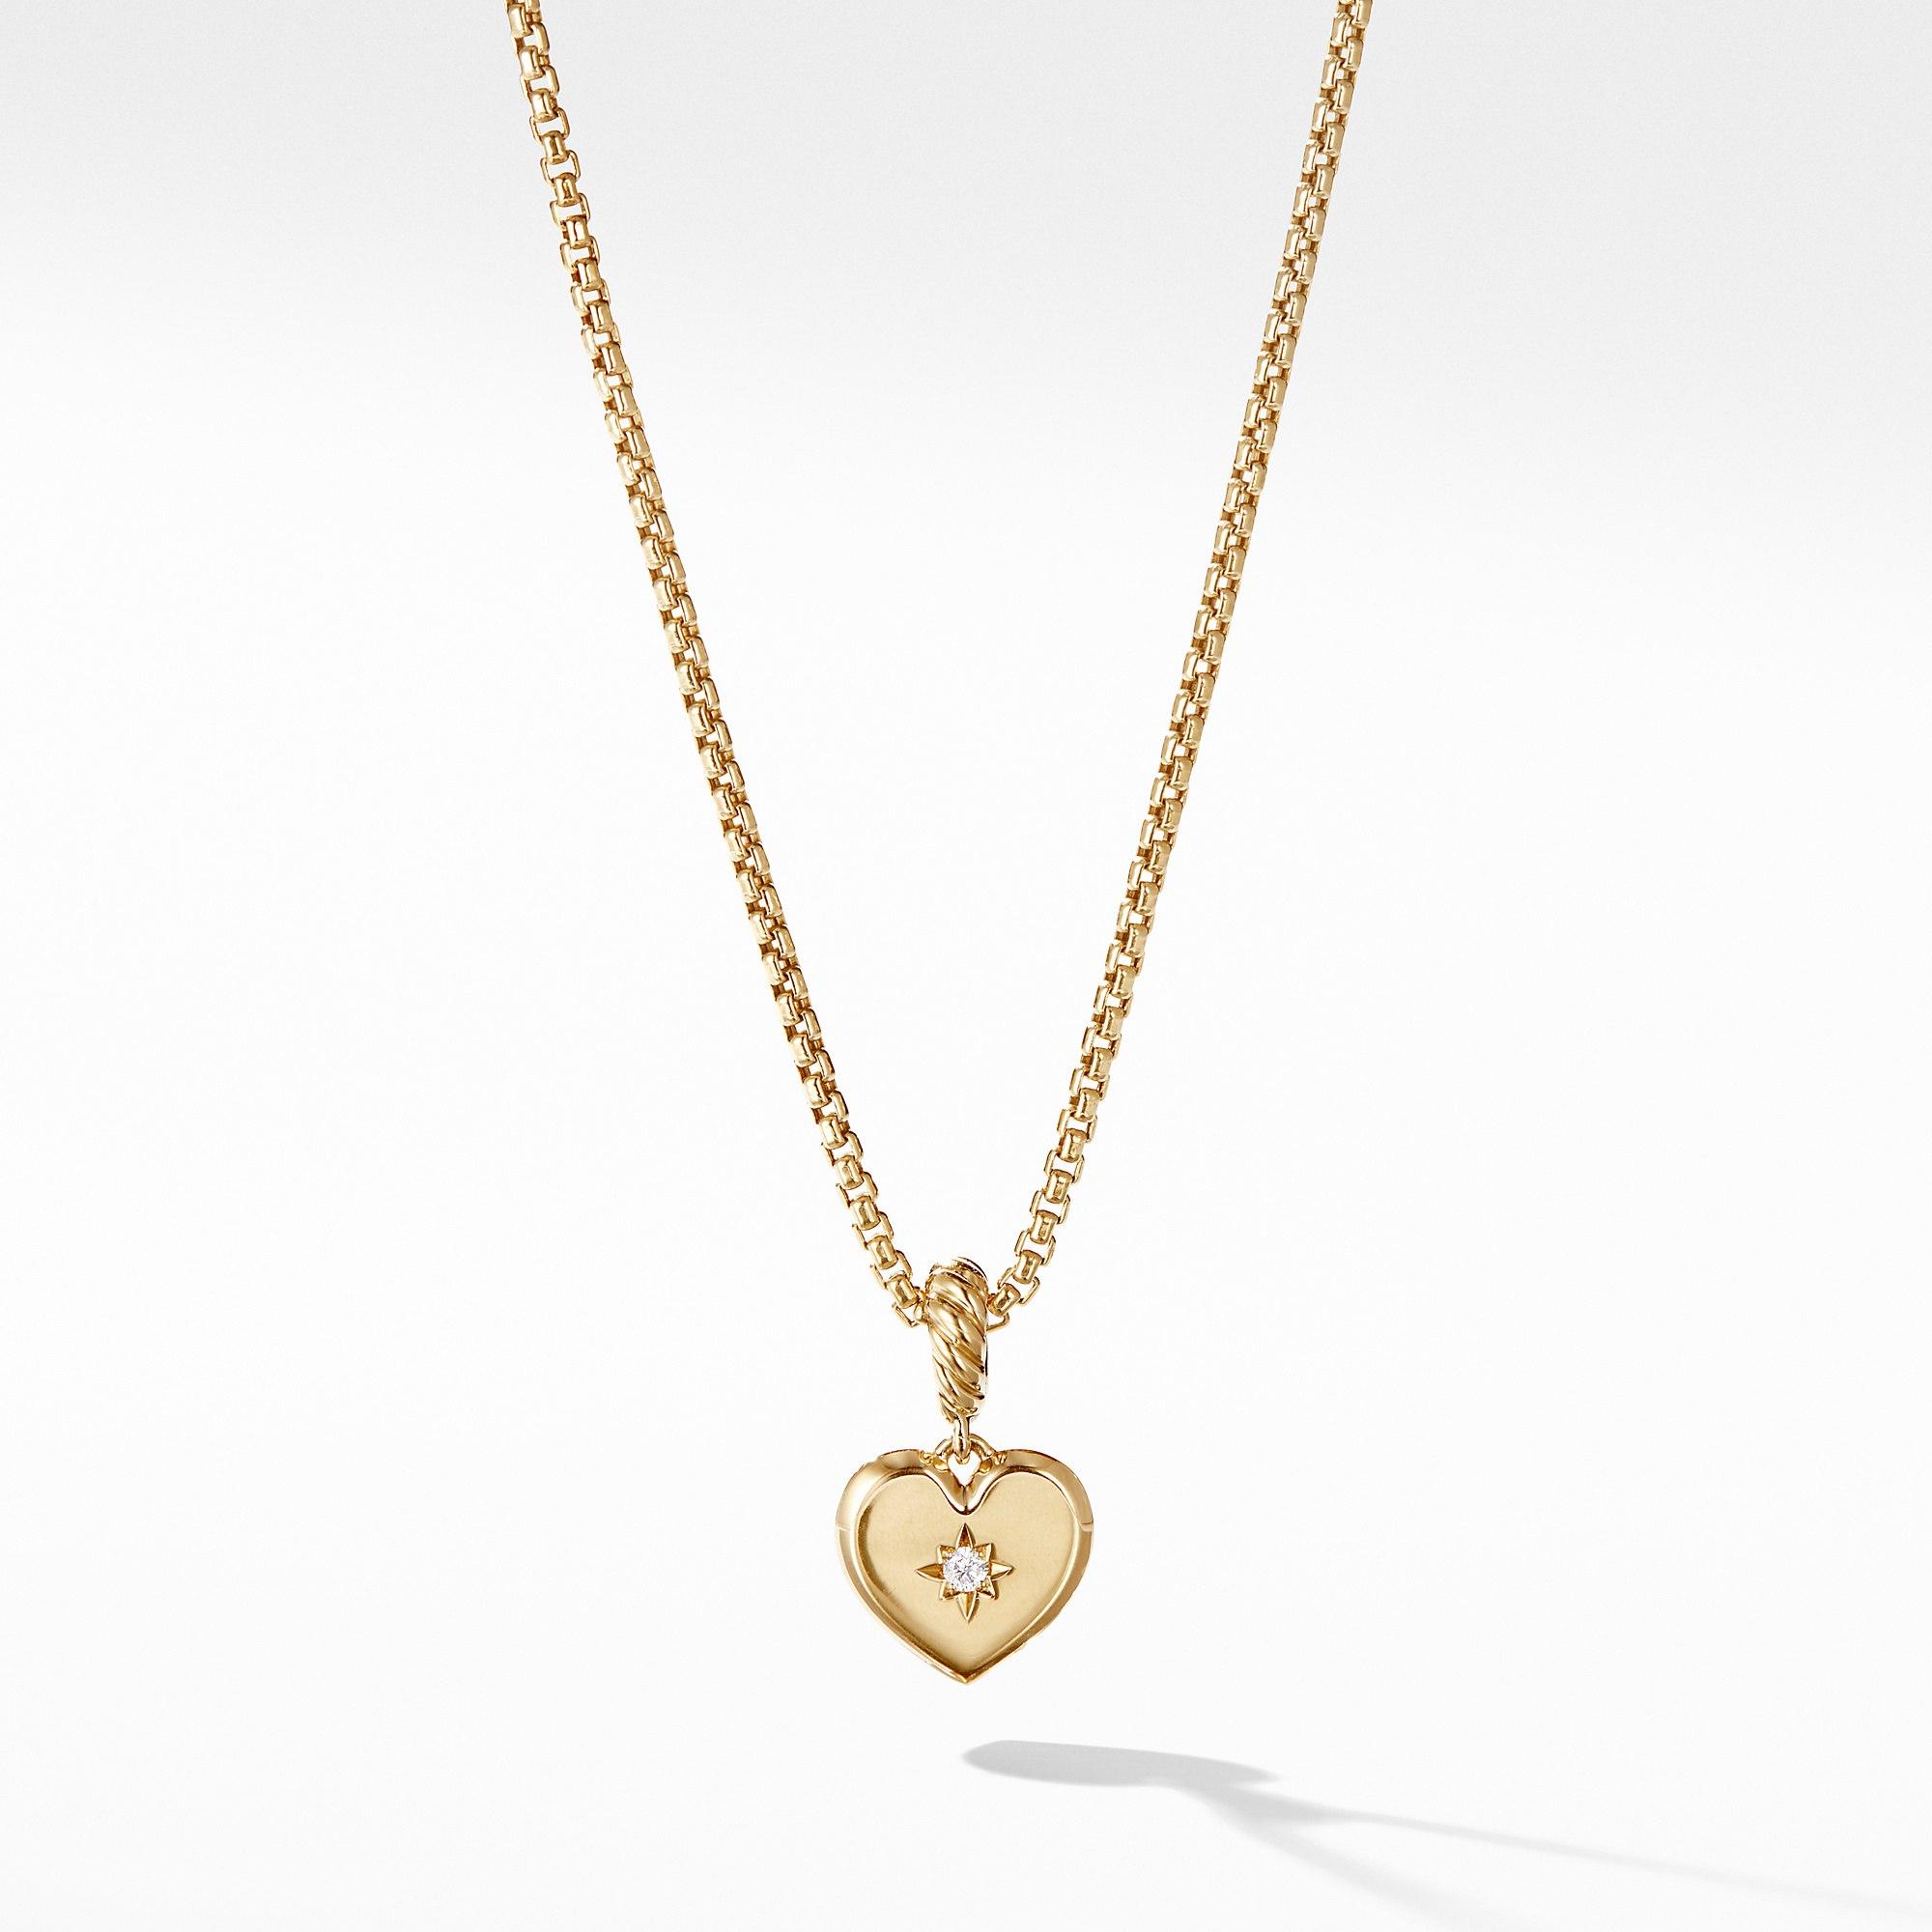 David Yurman Compass Heart Pendant in 18k Yellow Gold with Diamonds